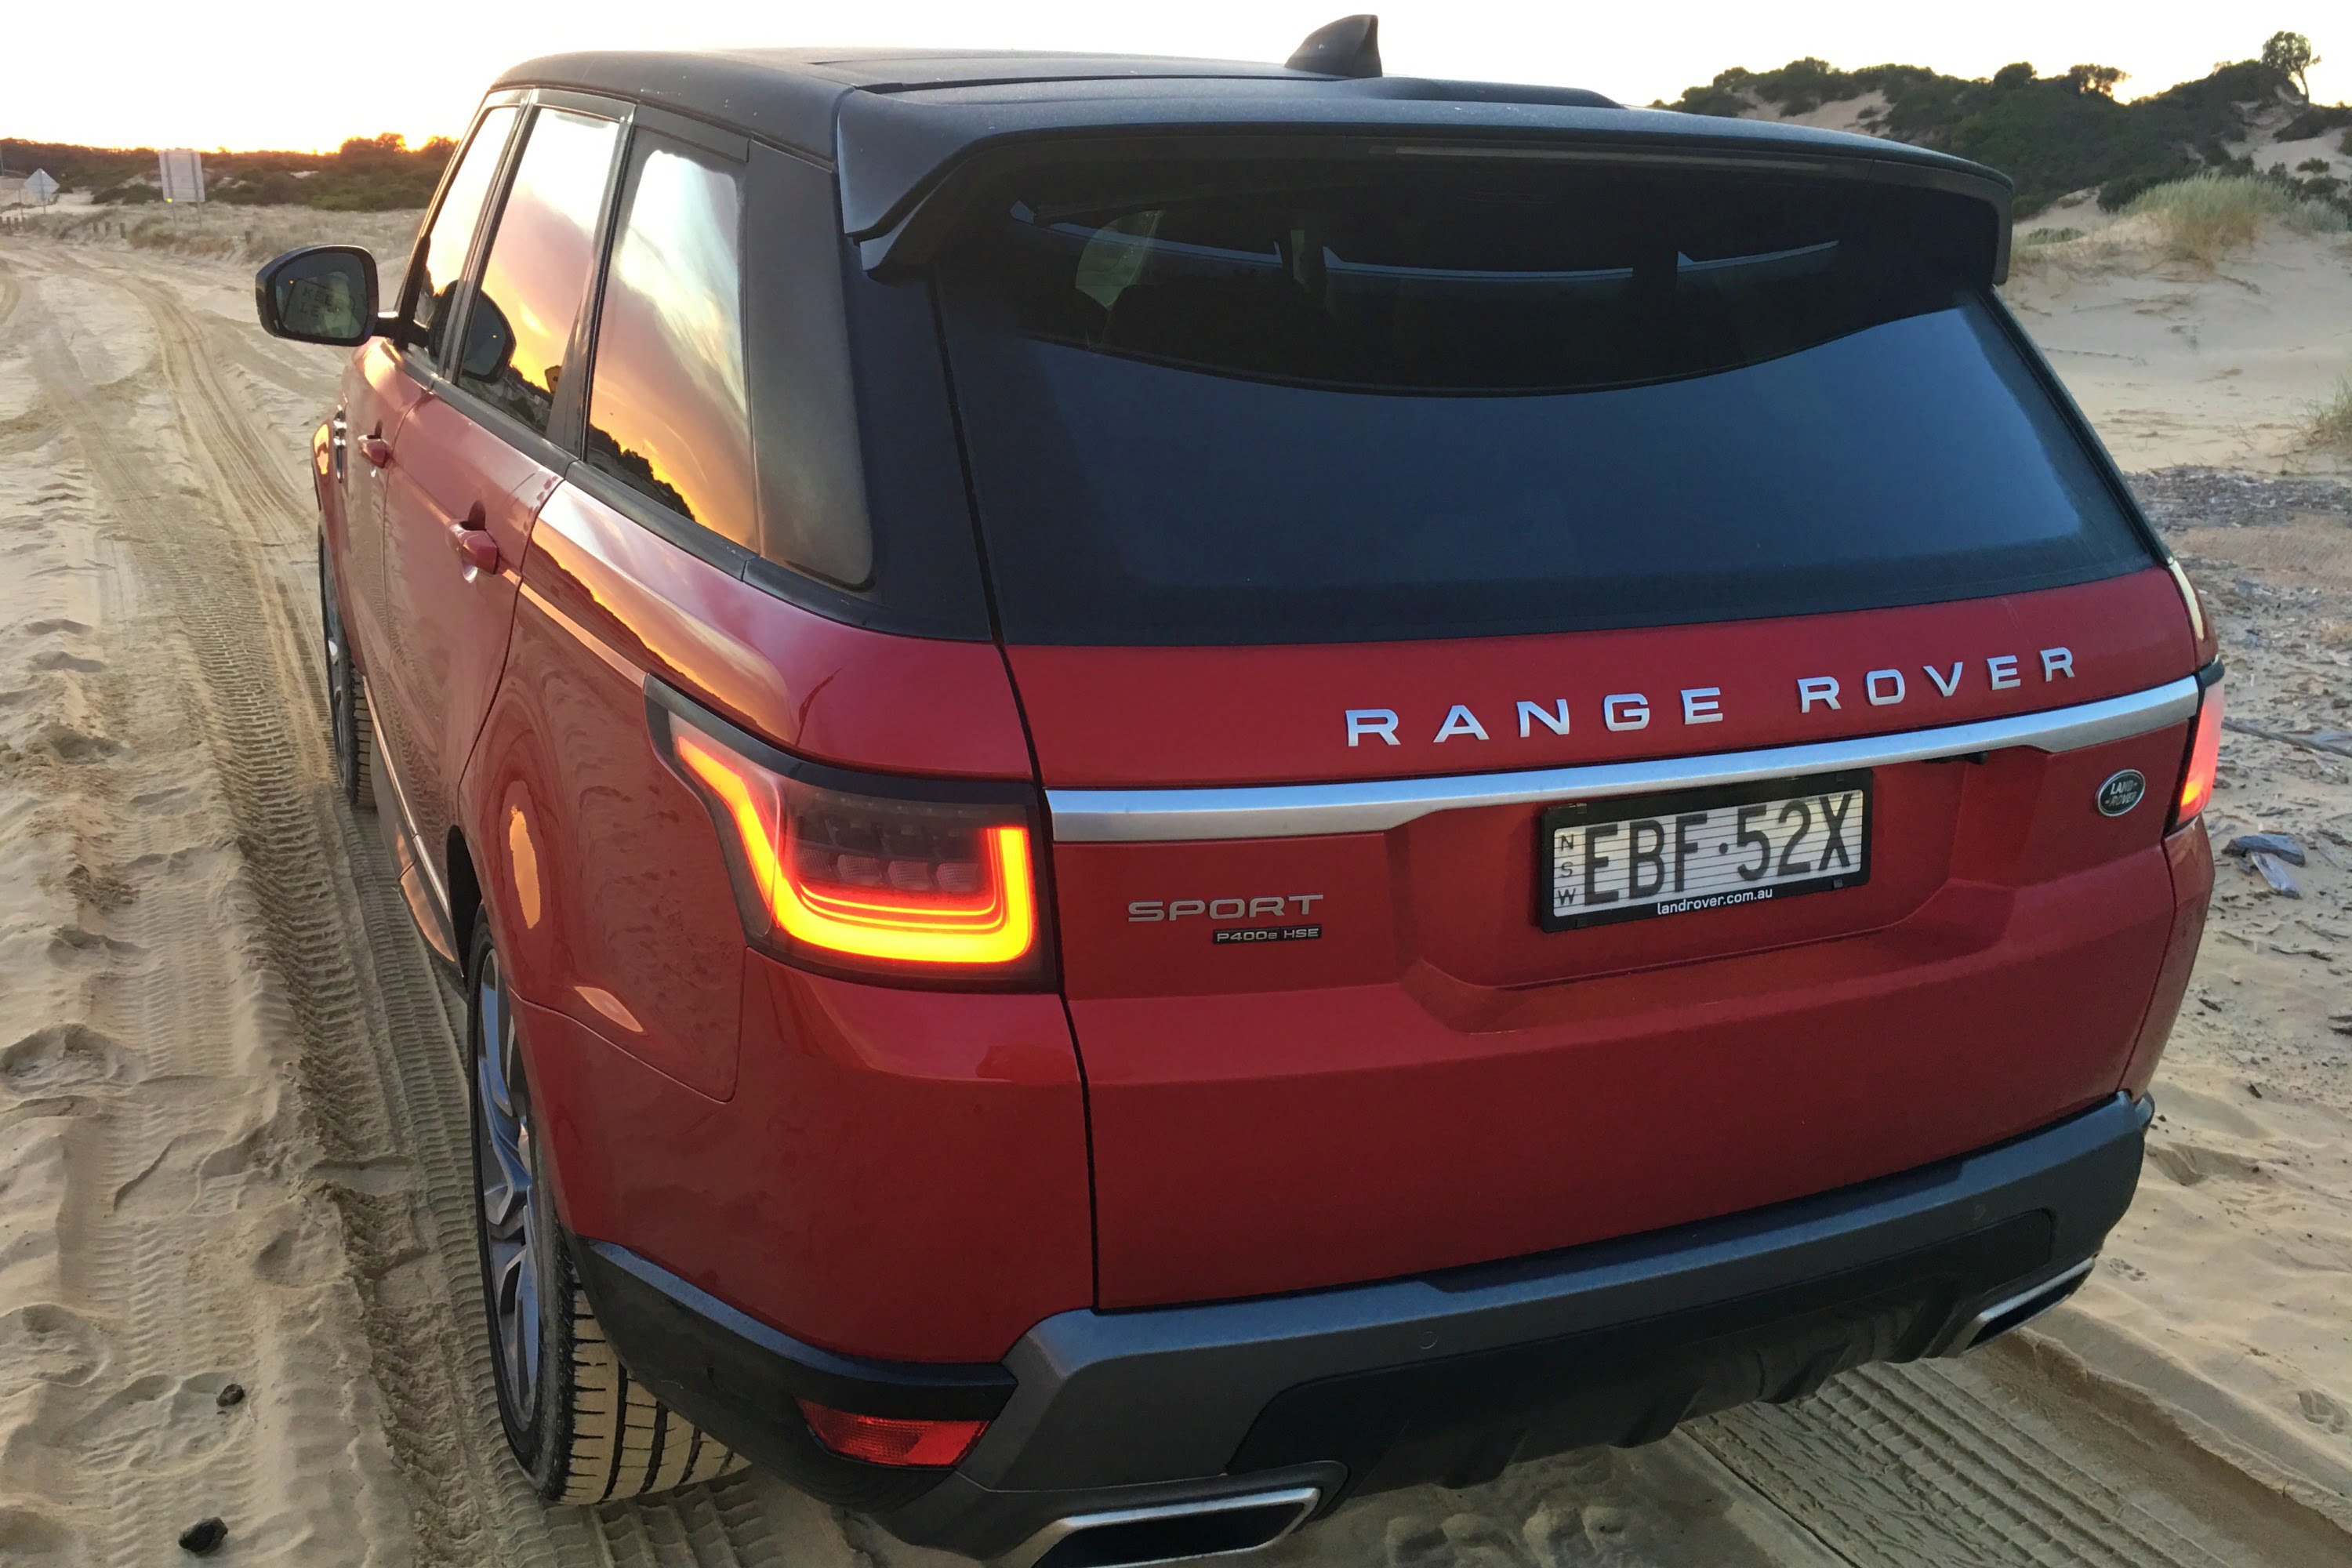 2019 Range Rover PHEV 13 rear